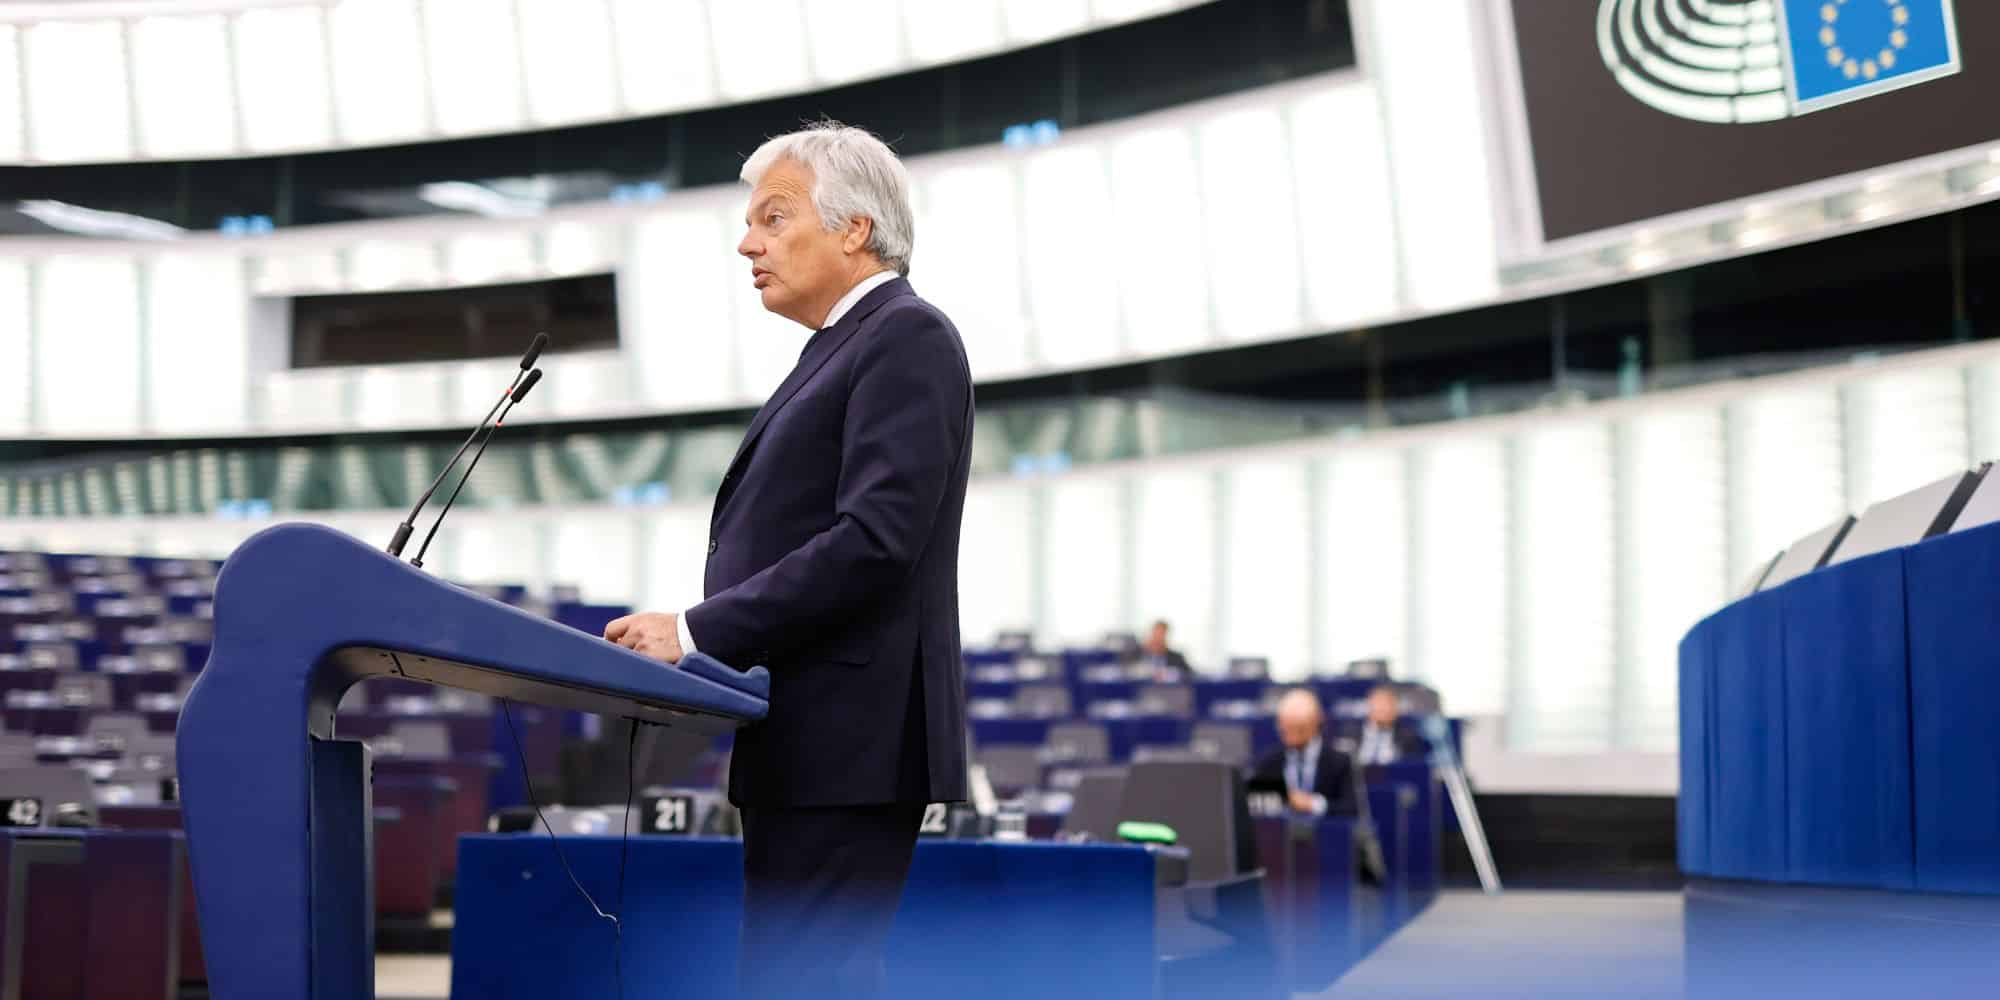 O επίτροπος Δικαιοσύνης Ντιντιέ Ρέιντερς στο Ευρωκοινοβούλιο μιλά για τις υποκλοπές στην Ελλάδα